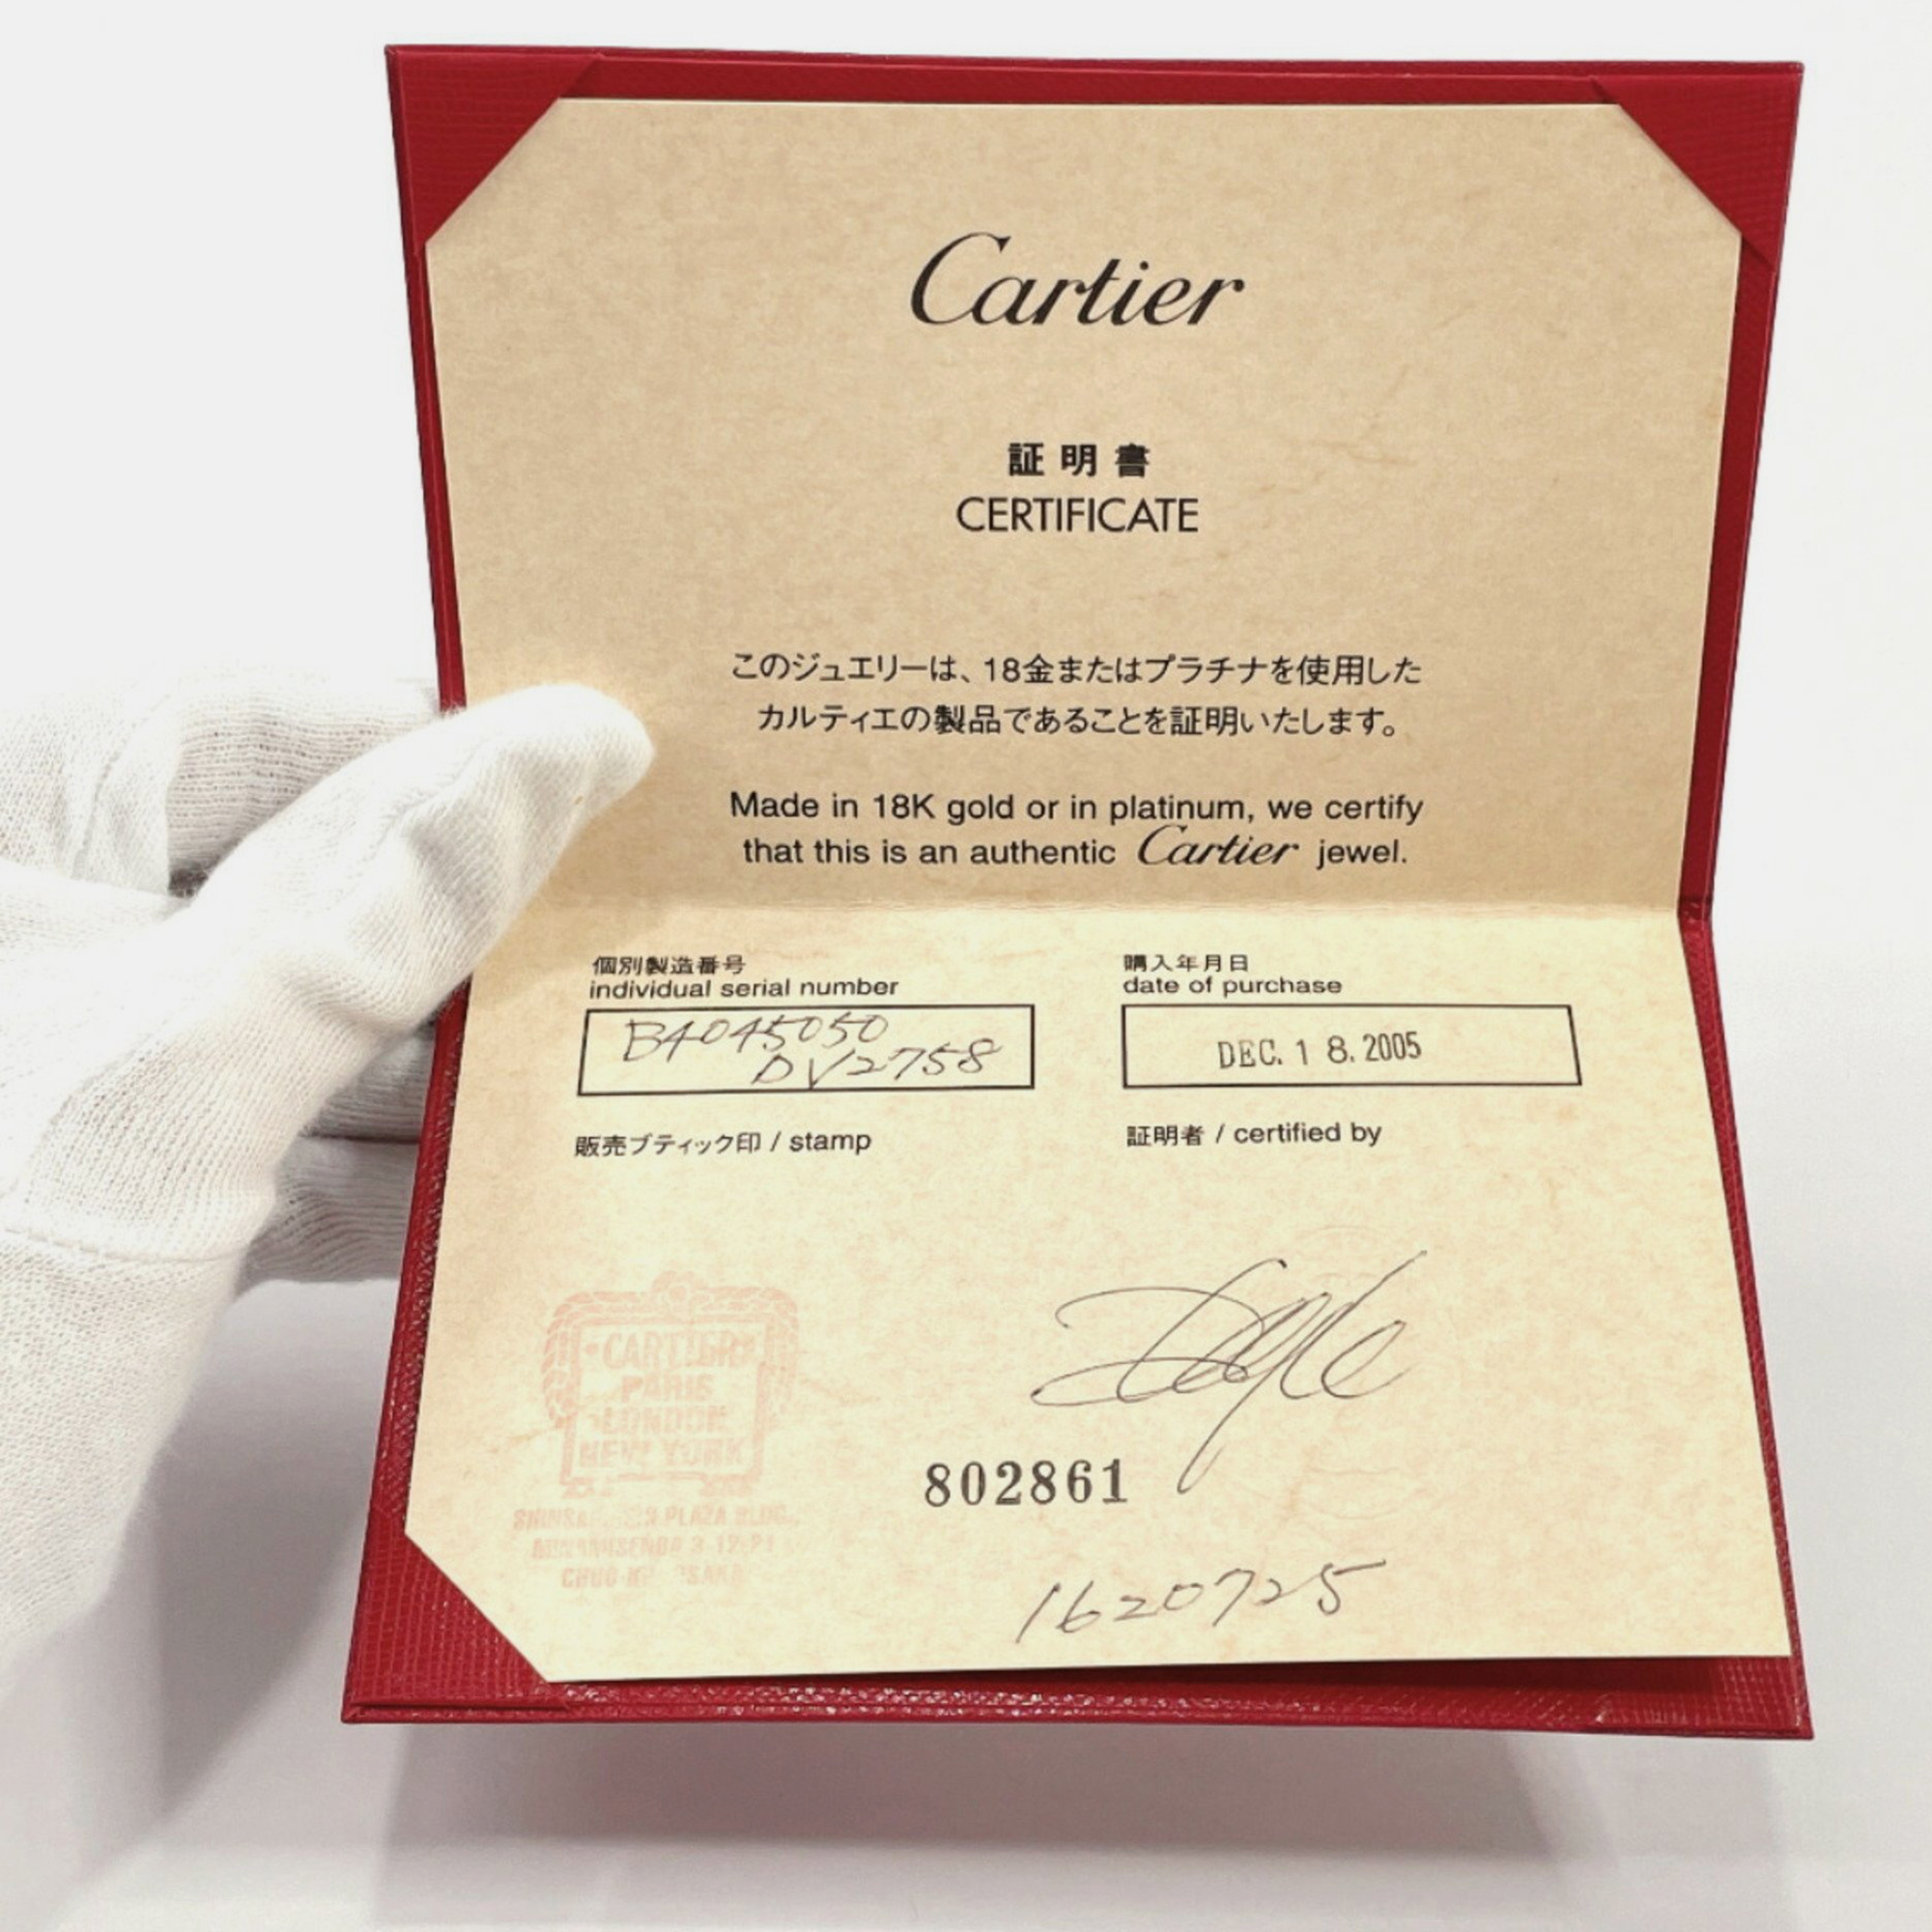 Cartier Lanieres 18K White Gold Ring EU 50